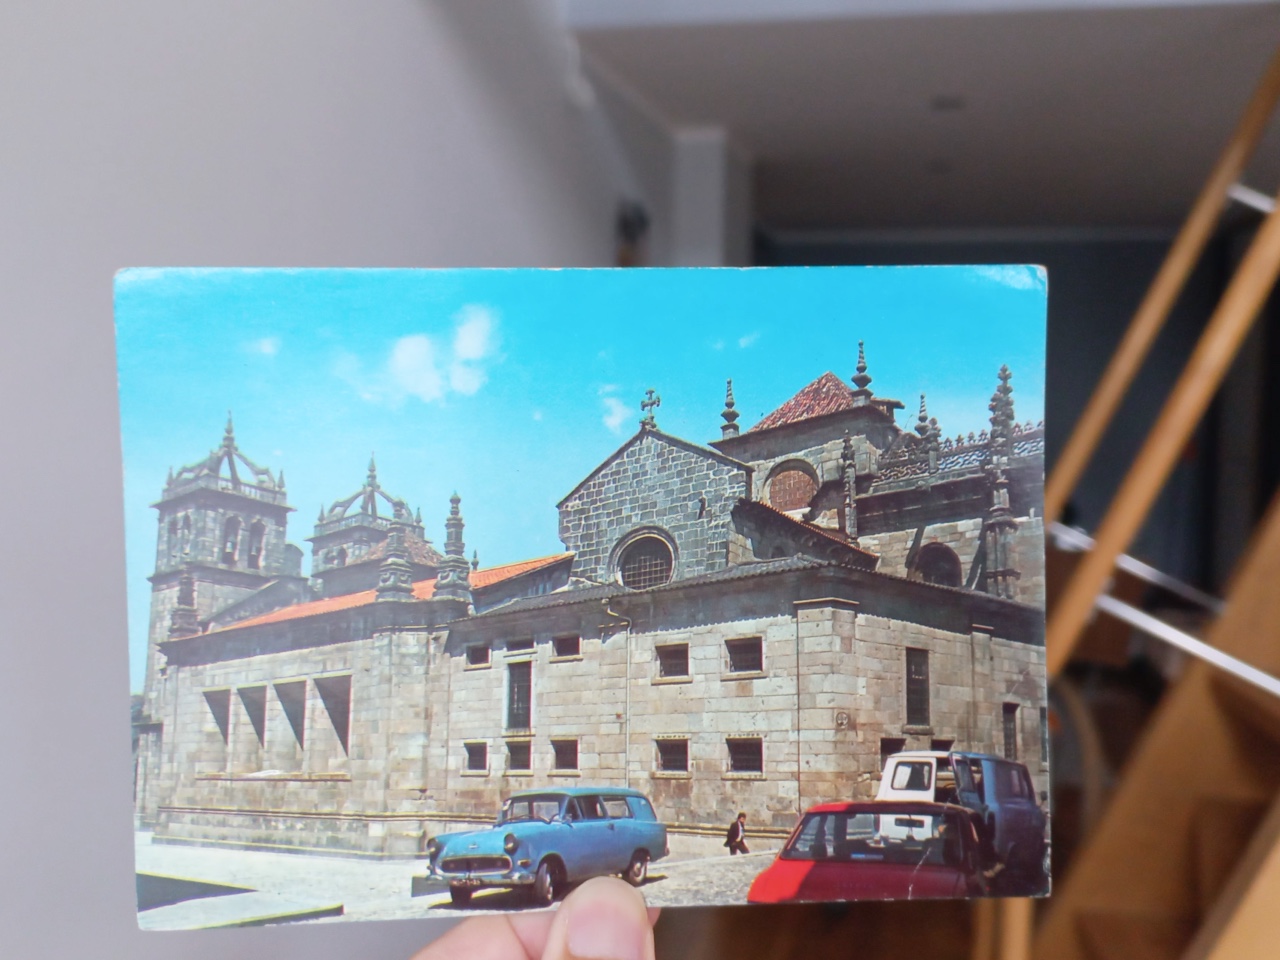 A postcard from Braga, Portugal.